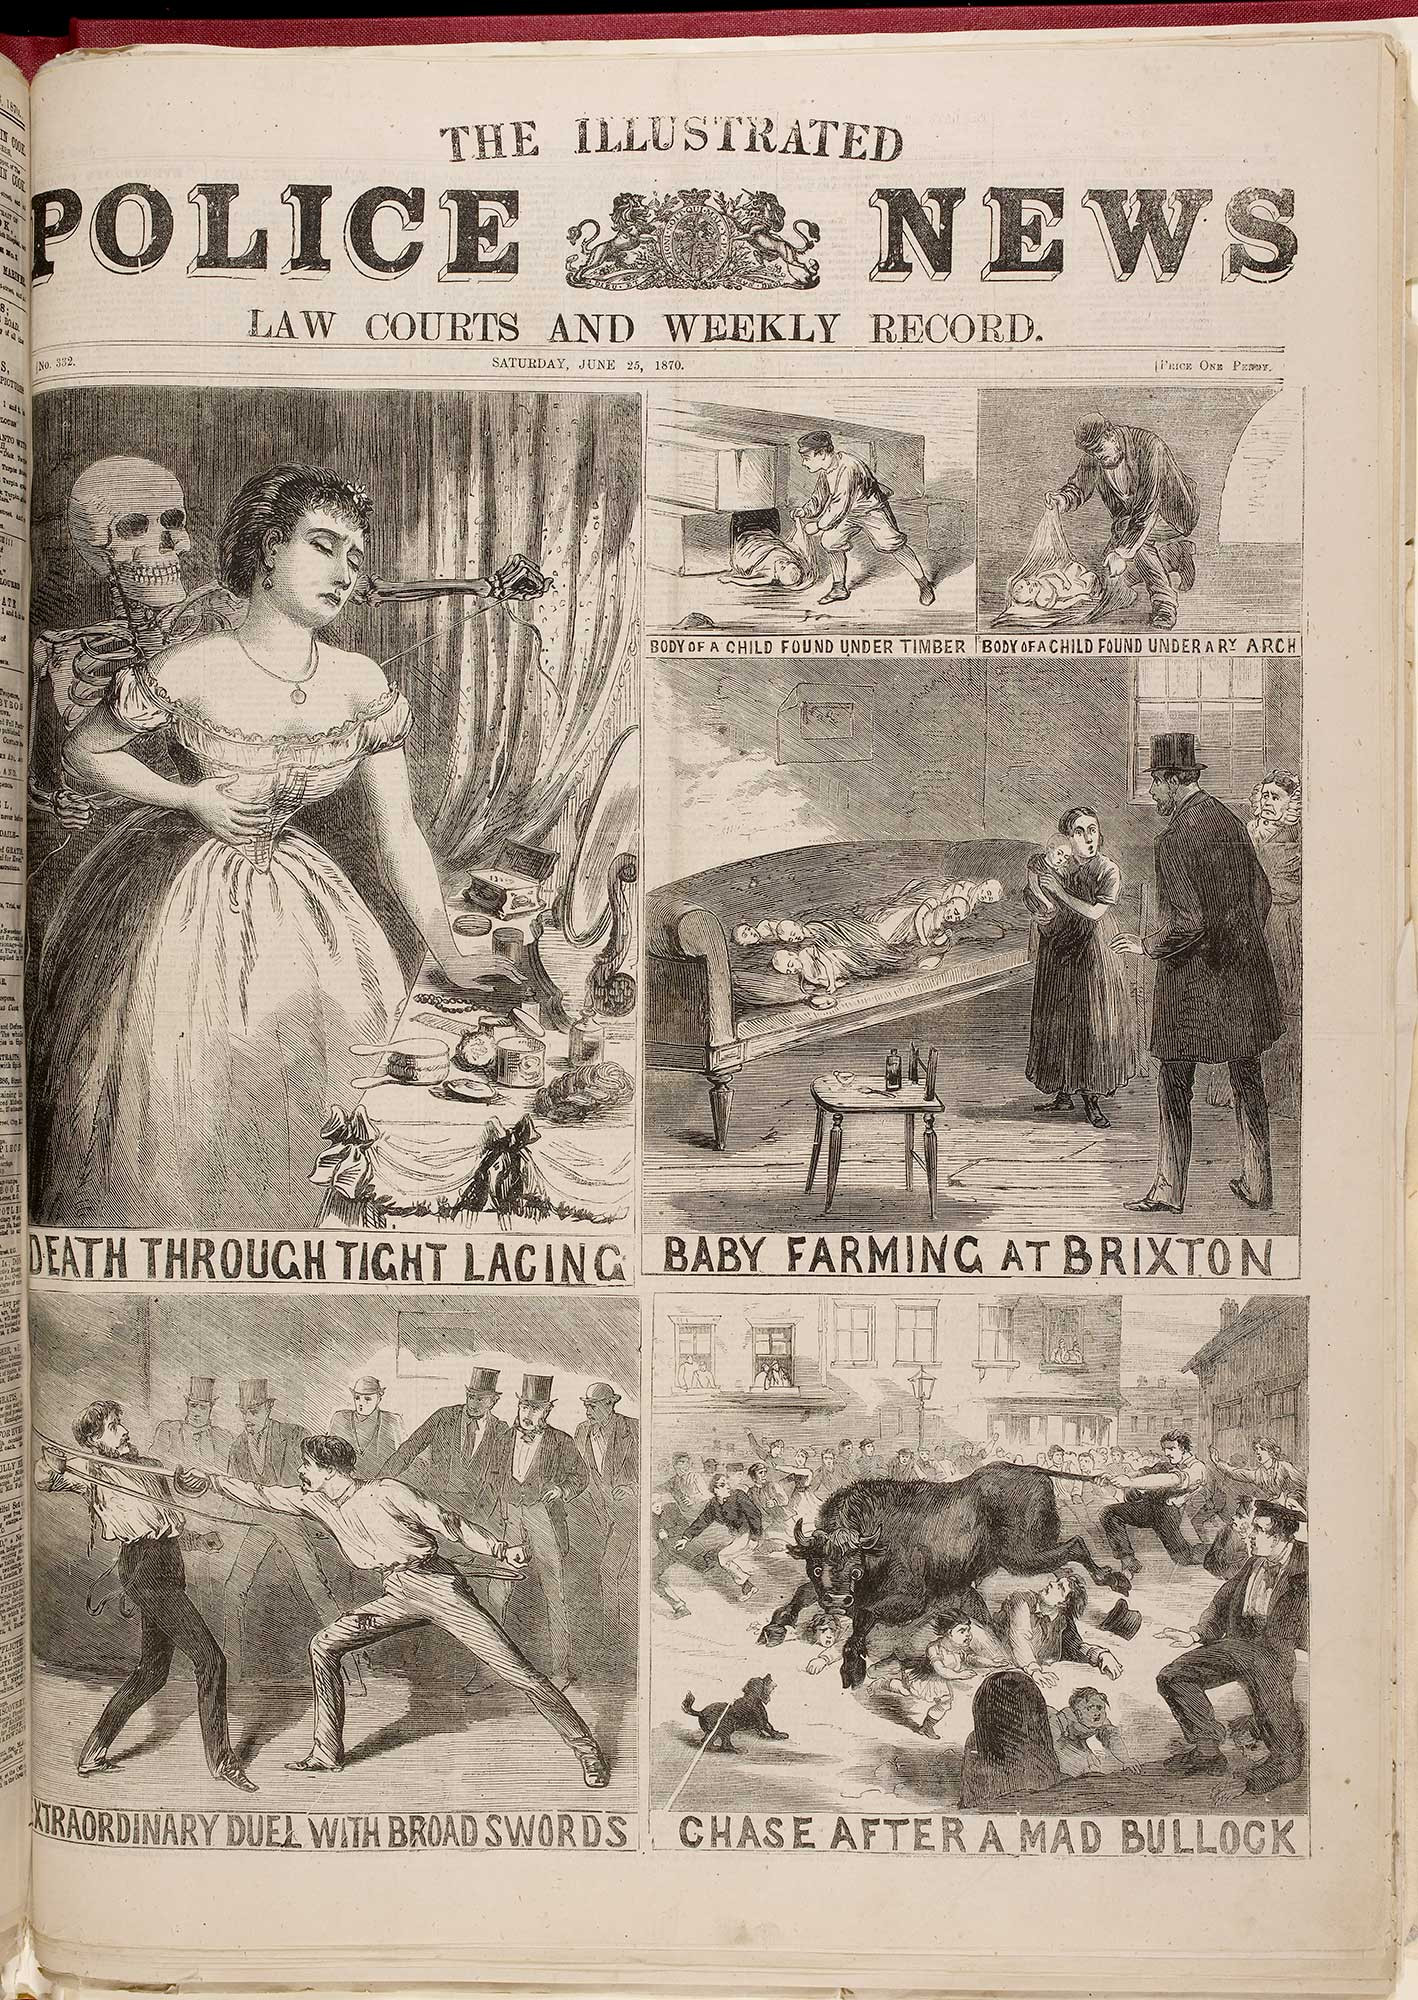 Титульная страница газеты The Illustrated Police News 1870&nbsp;г.&nbsp;Источник: British Newspaper Archive